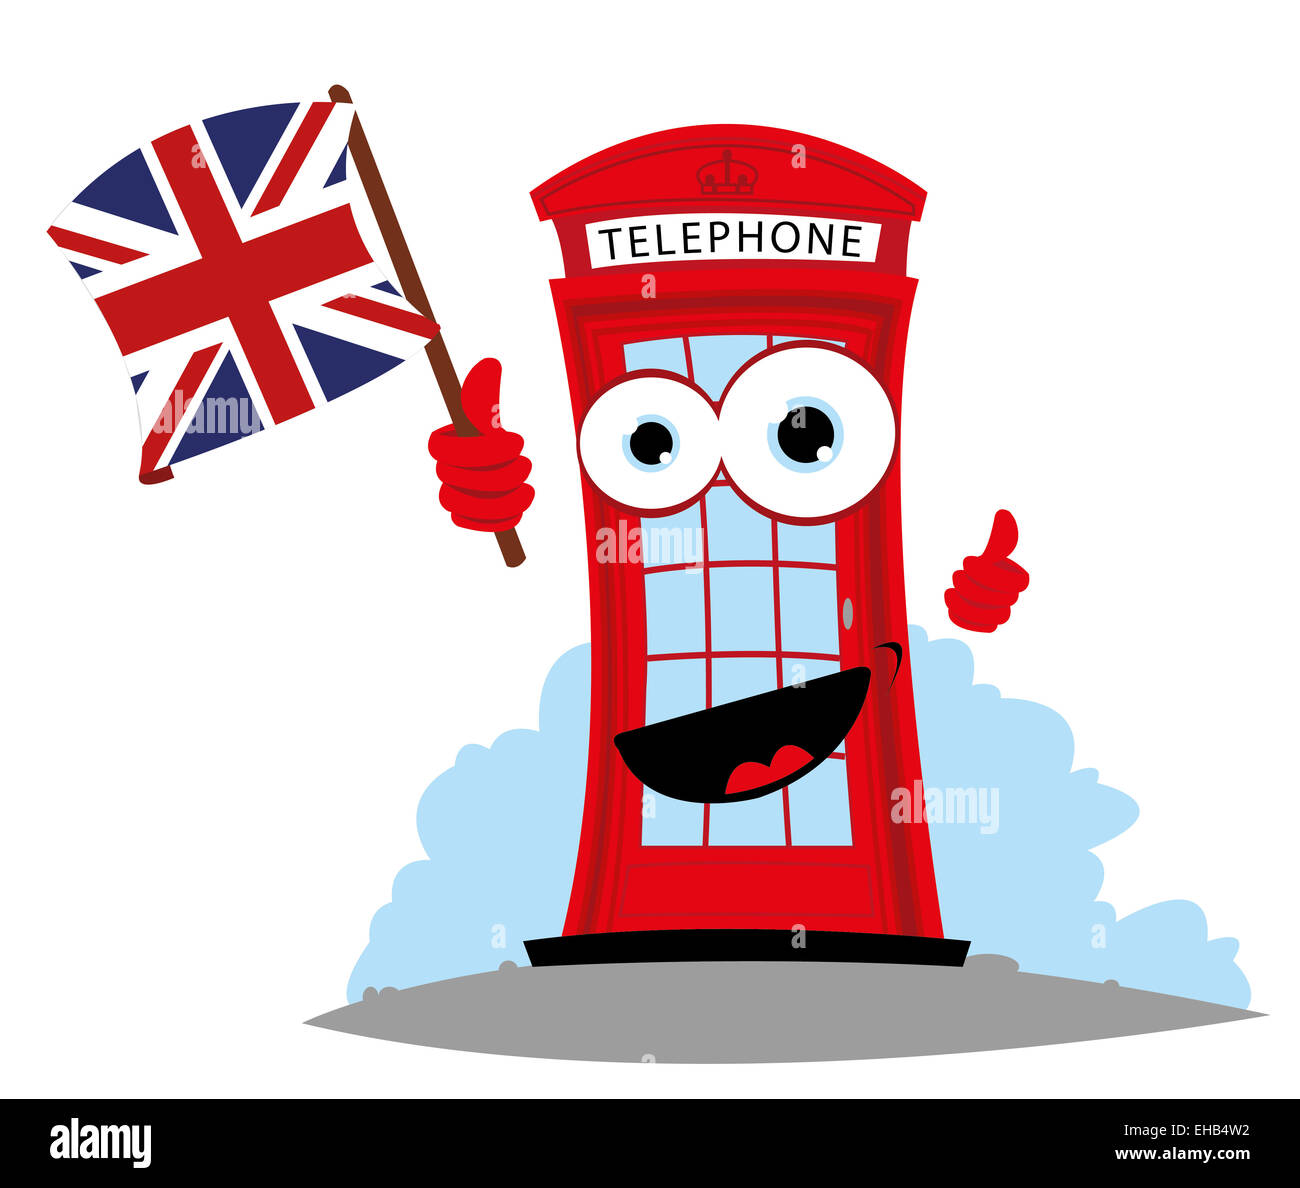 cartoon representing a funny English Telephone, holding an English flag Stock Photo